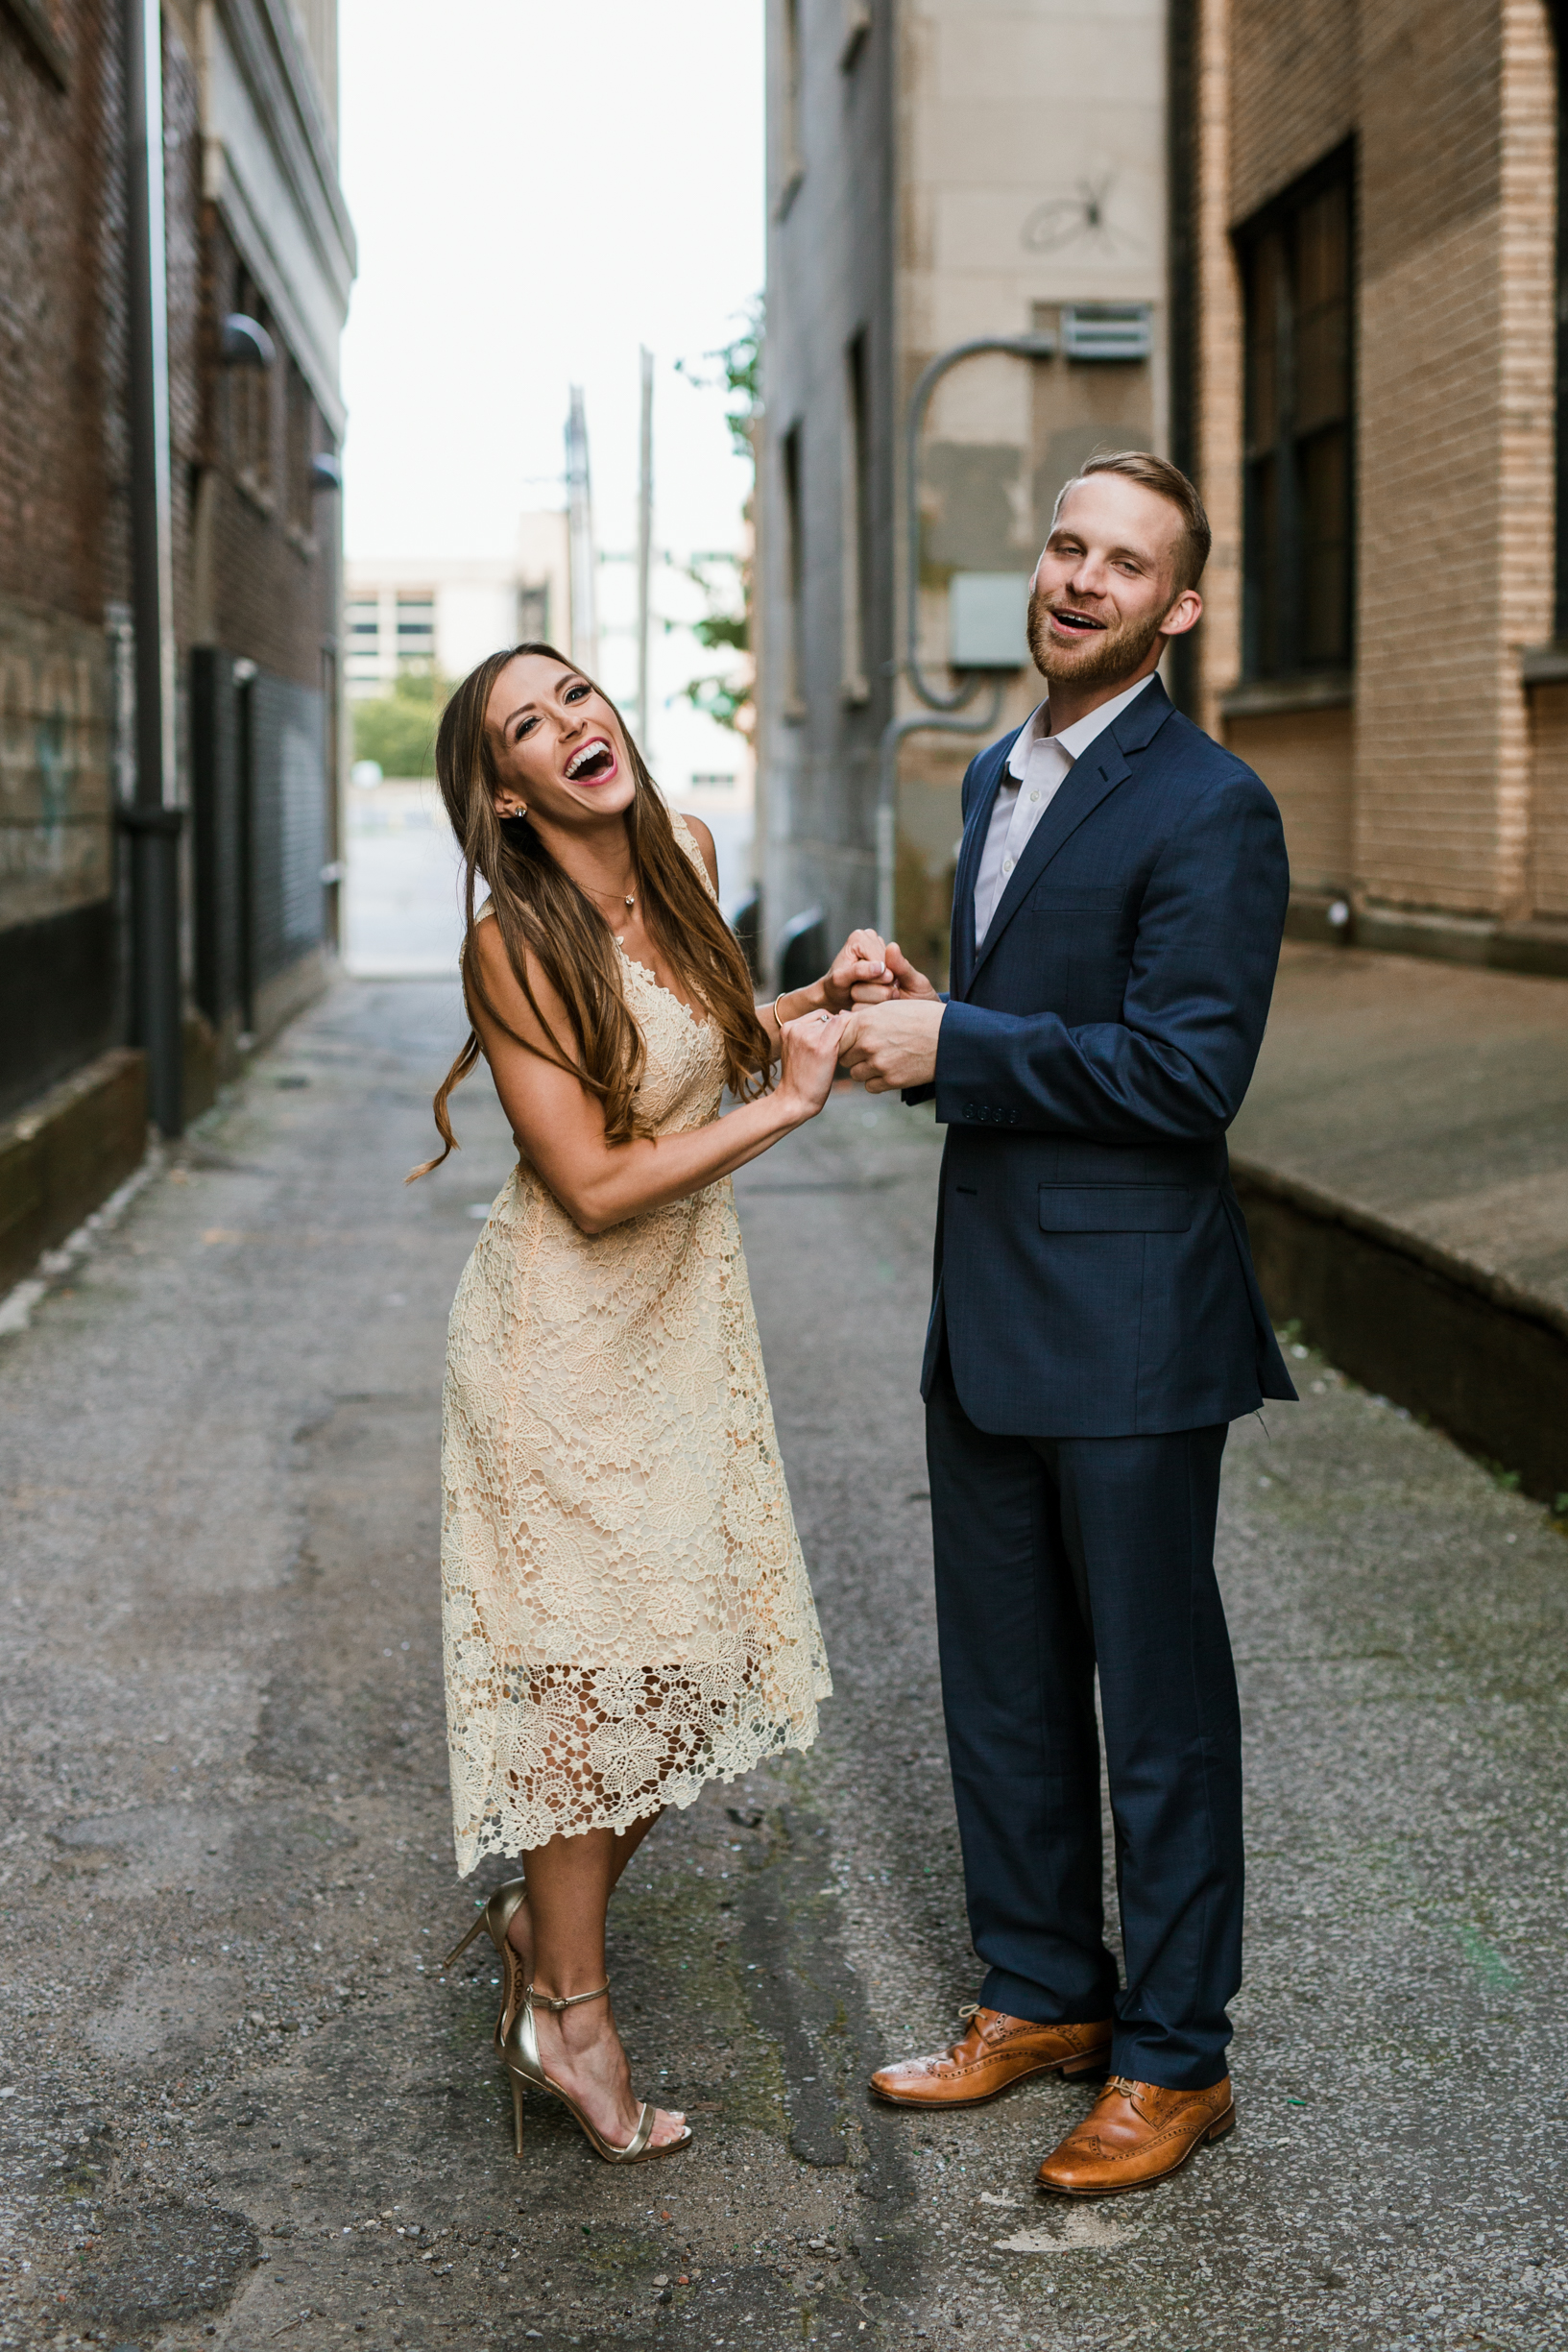 Victoria & Chad Engagement 2018 Crystal Ludwick Photo Louisville Kentucky Wedding Photographer WEBSITE (18 of 48).jpg